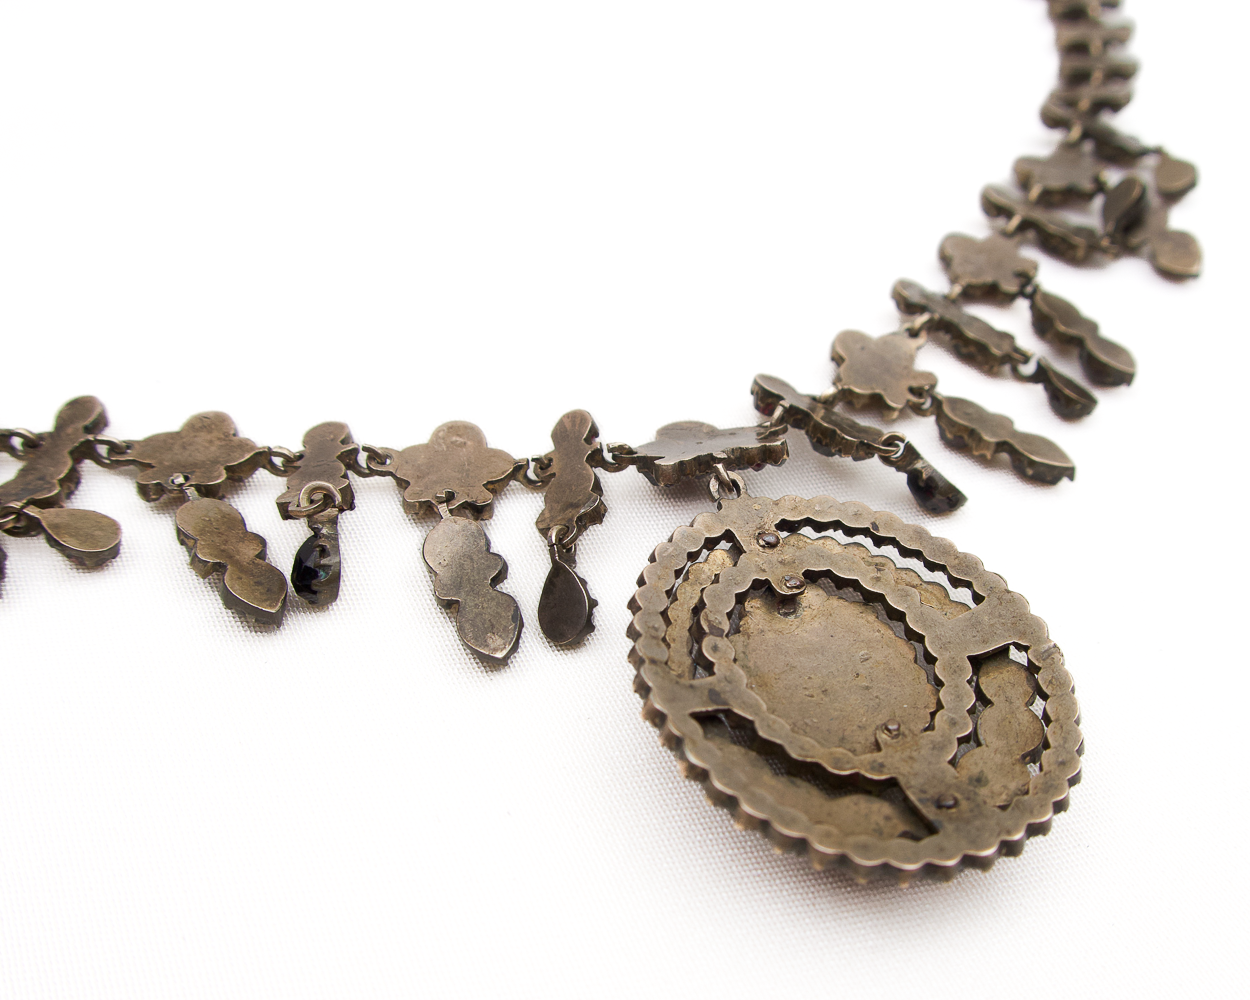 Victorian Garnet Pendant Necklace